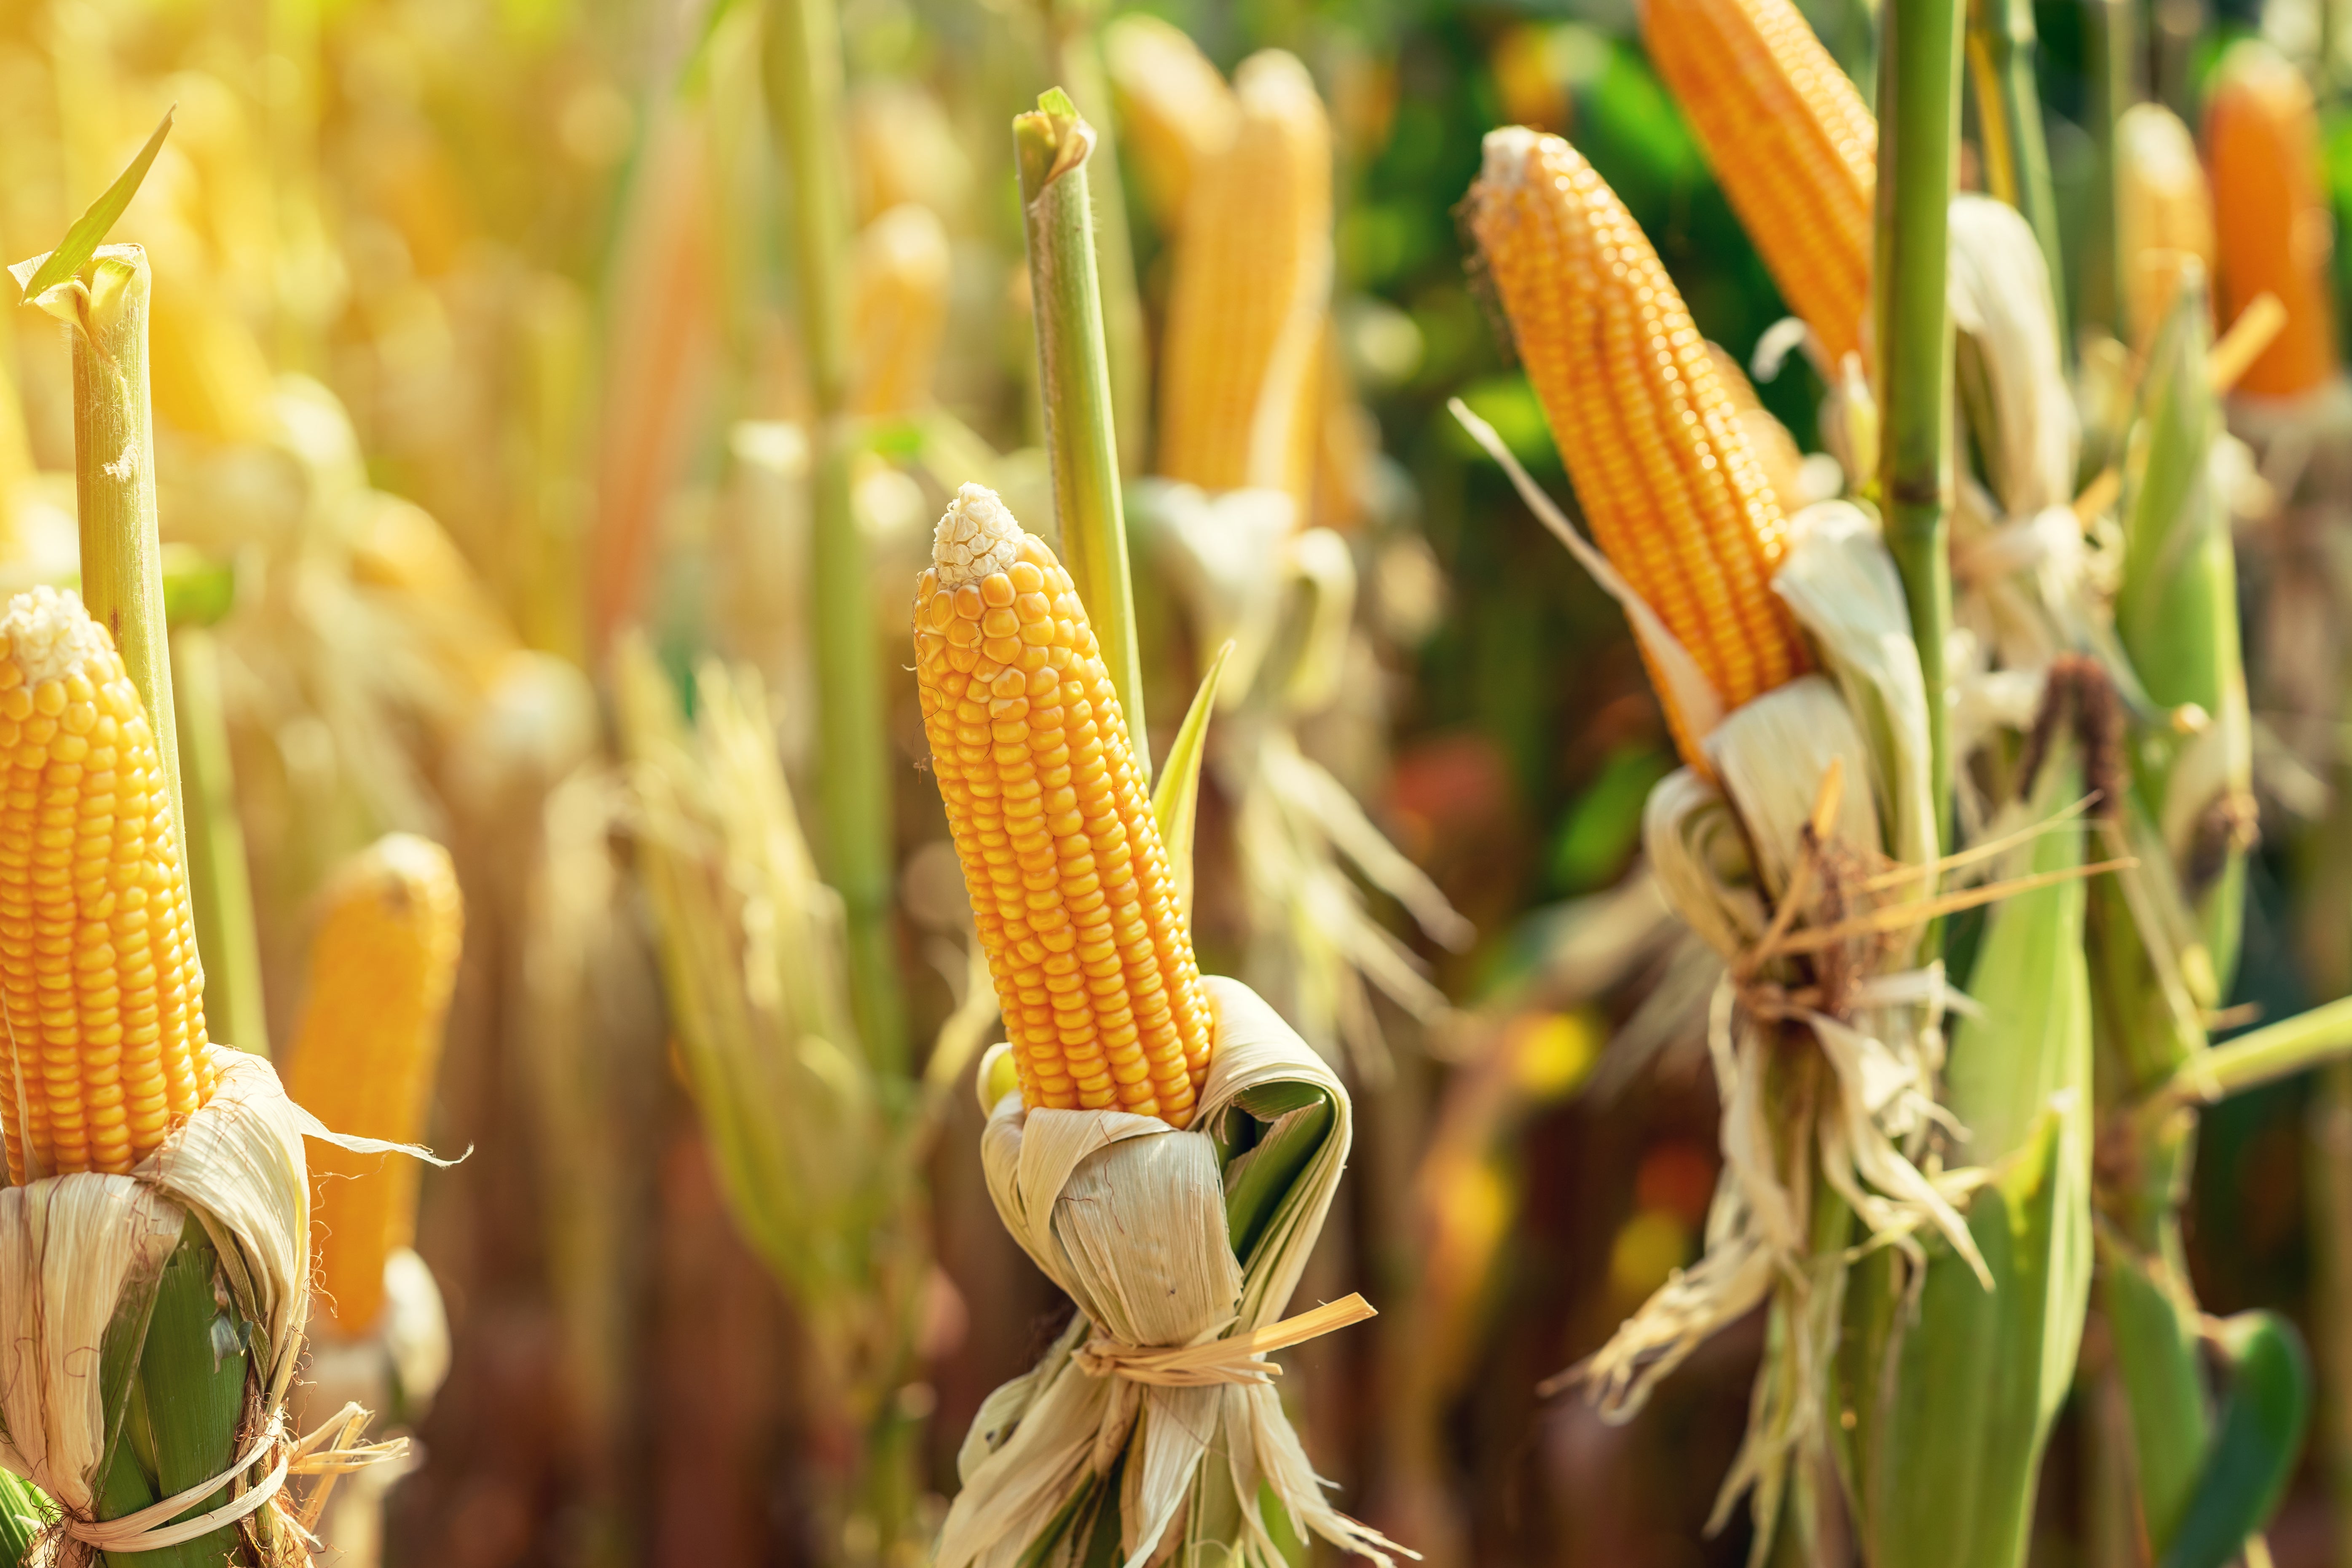 Growing Sweet Corn in Your Organic Garden